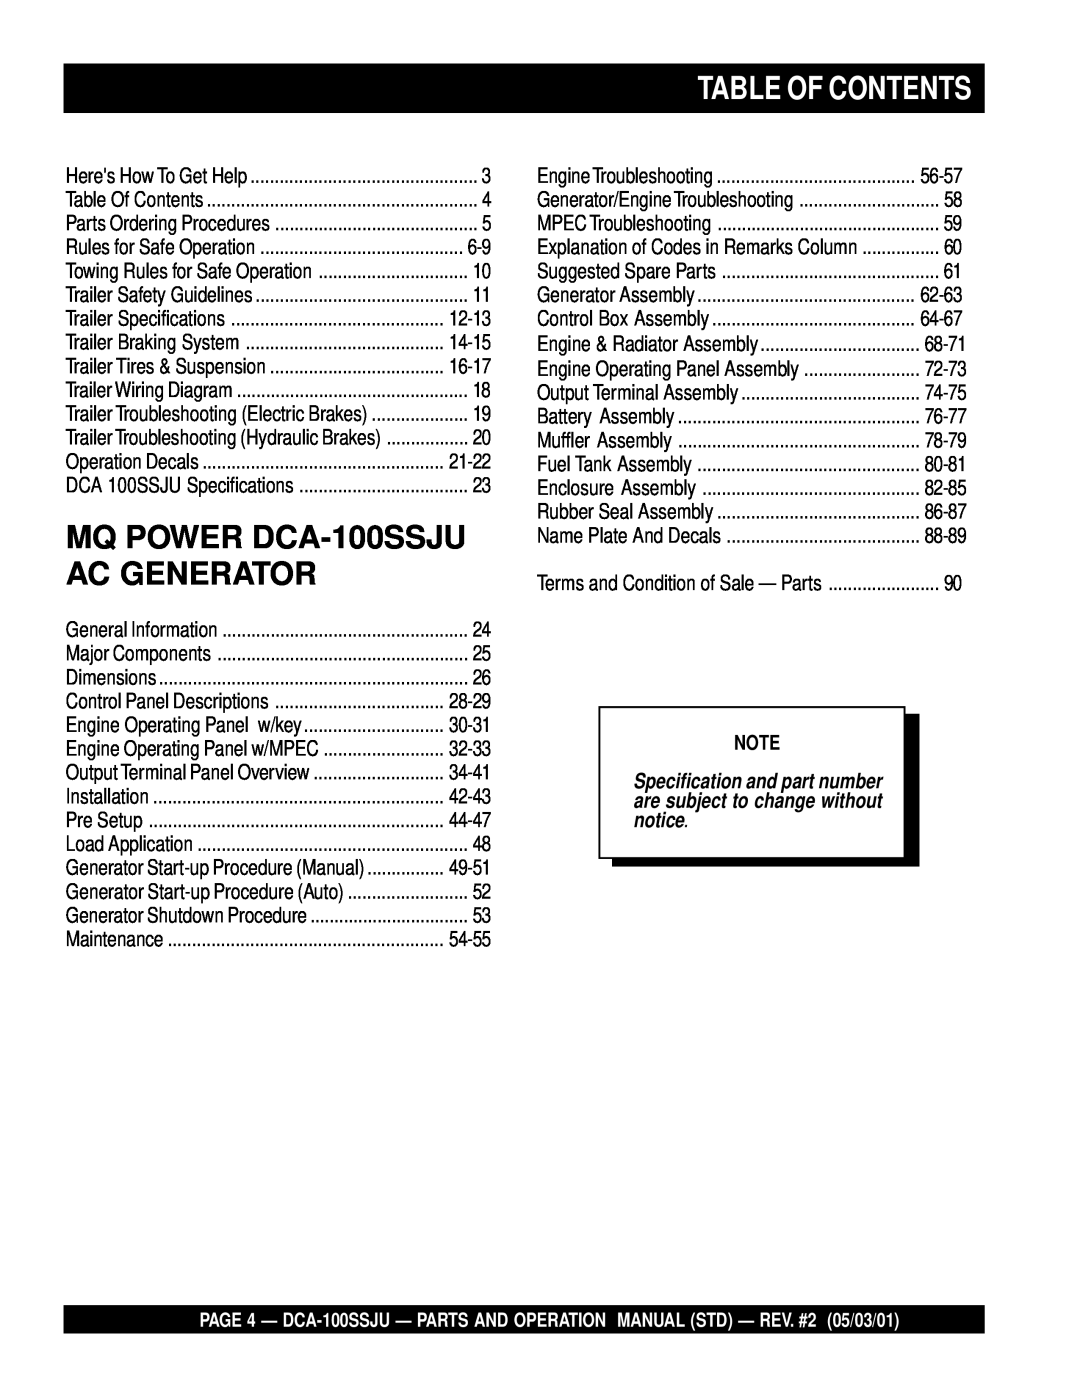 Multiquip operation manual Table Of Contents, MQ POWER DCA-100SSJU AC GENERATOR 